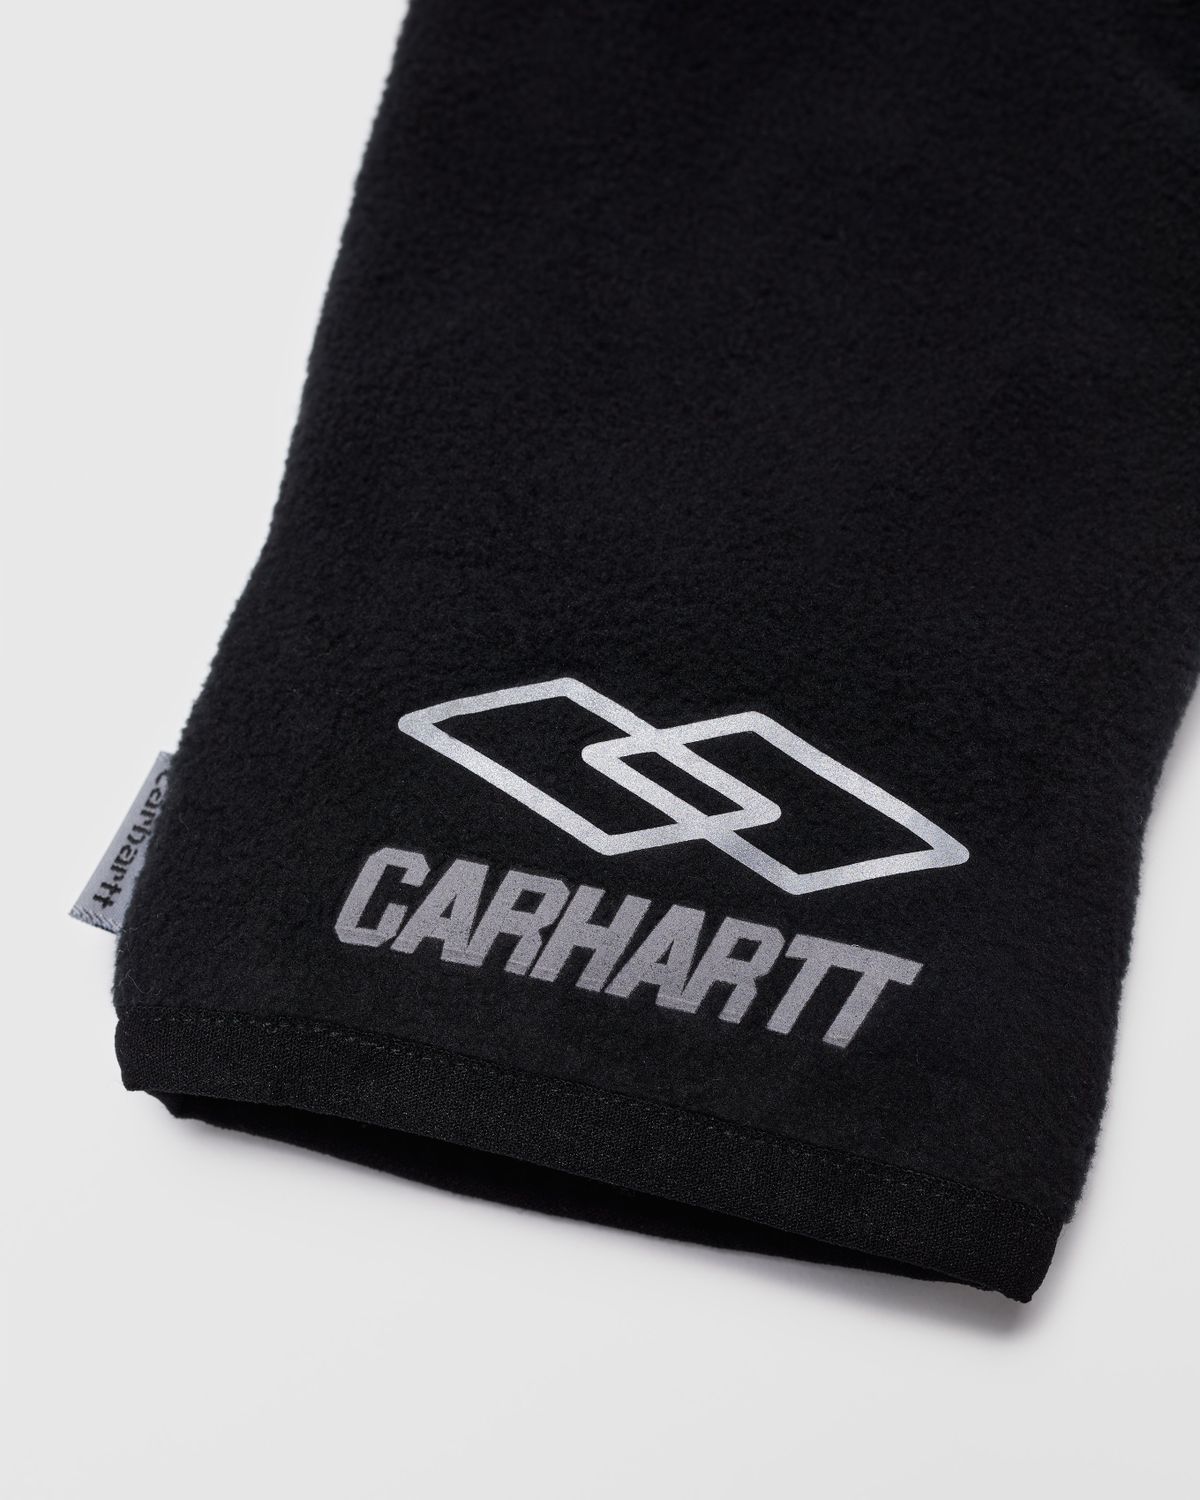 Carhartt WIP x Ljubav – Beaufort Gloves - Gloves - Black - Image 3